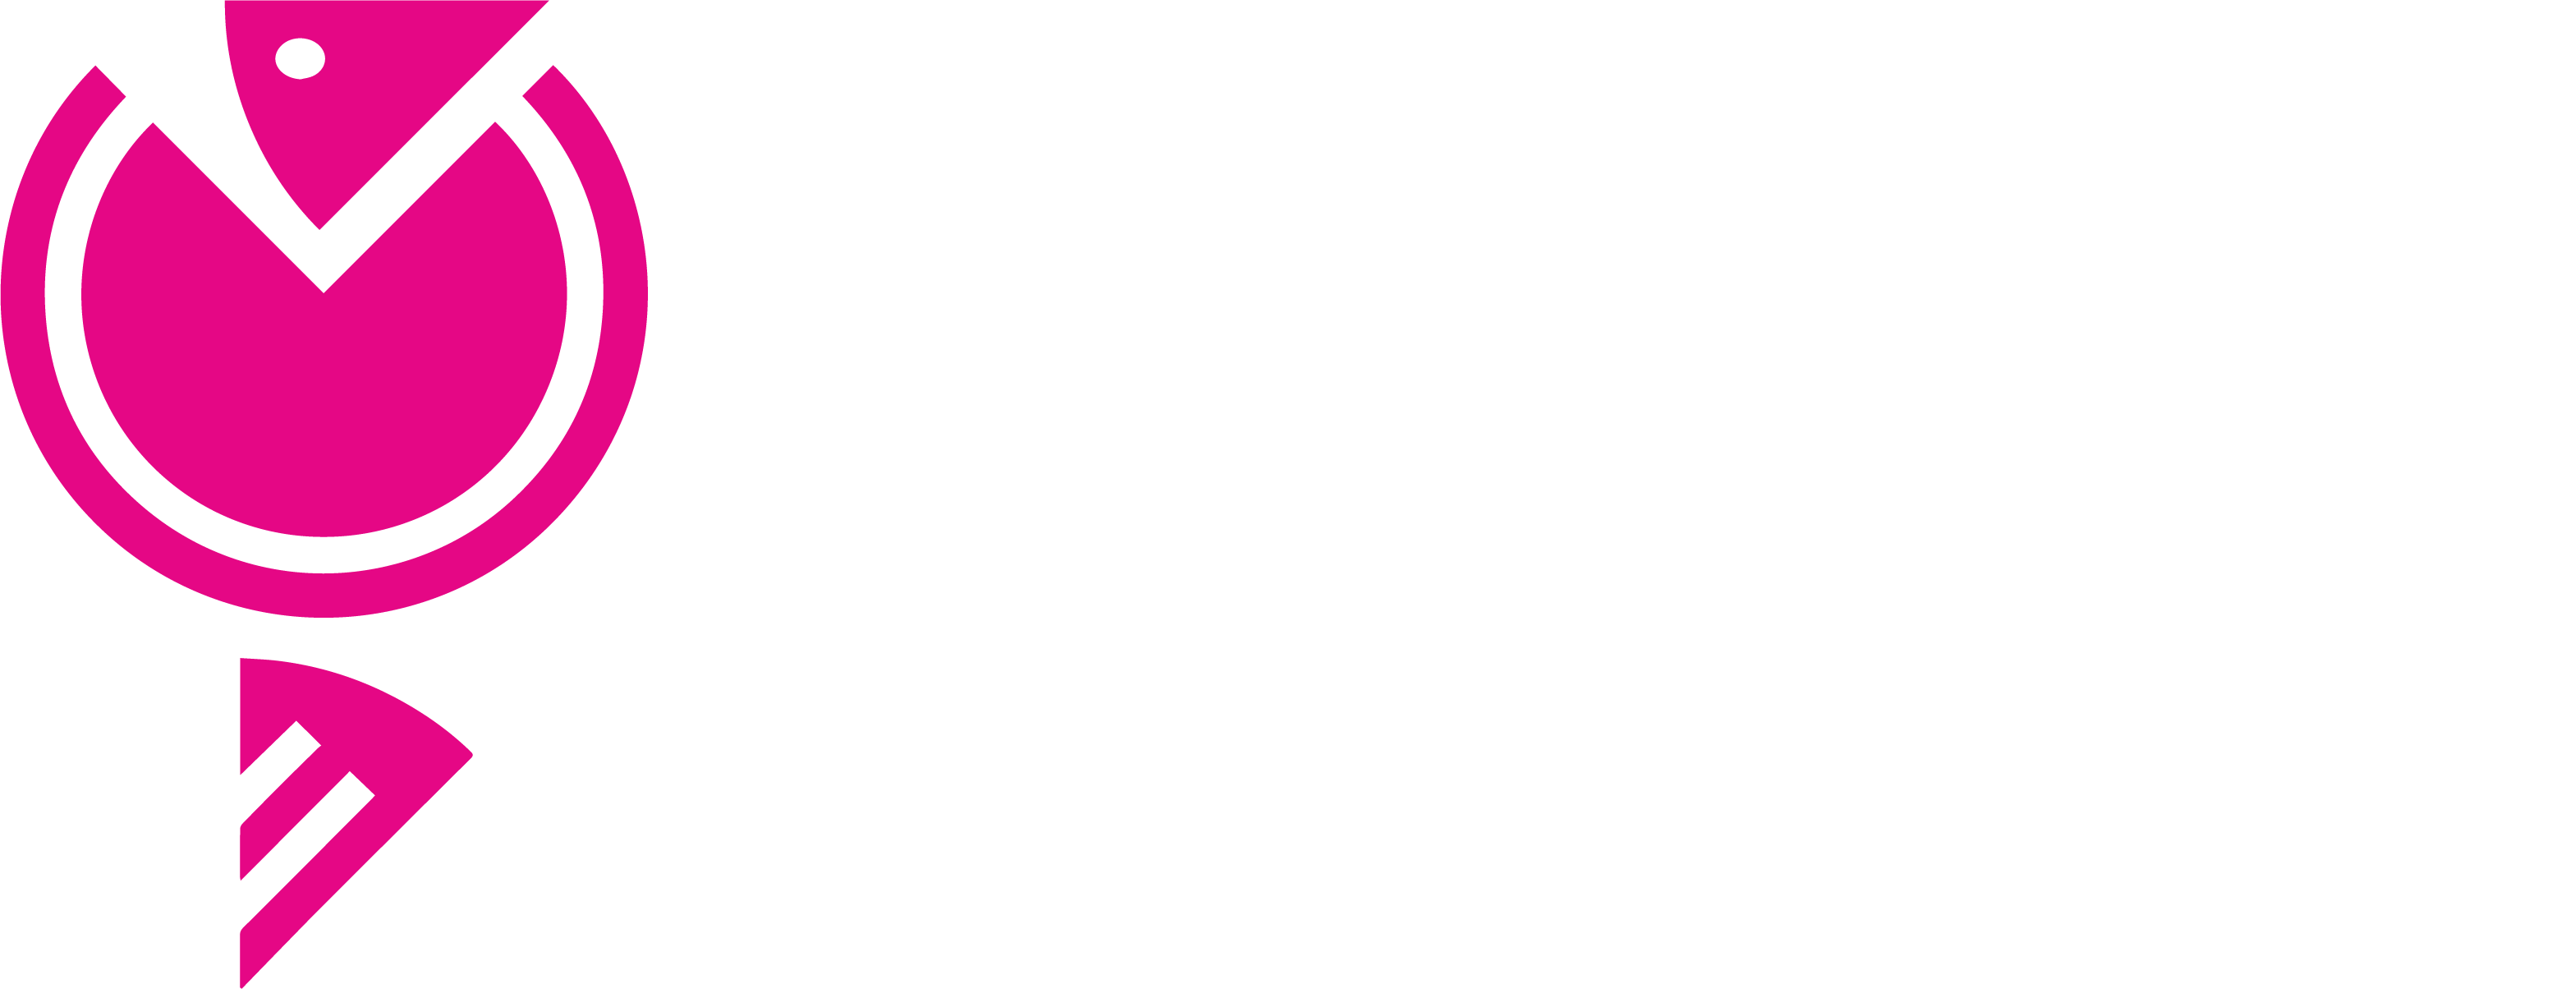 logo-phoenix